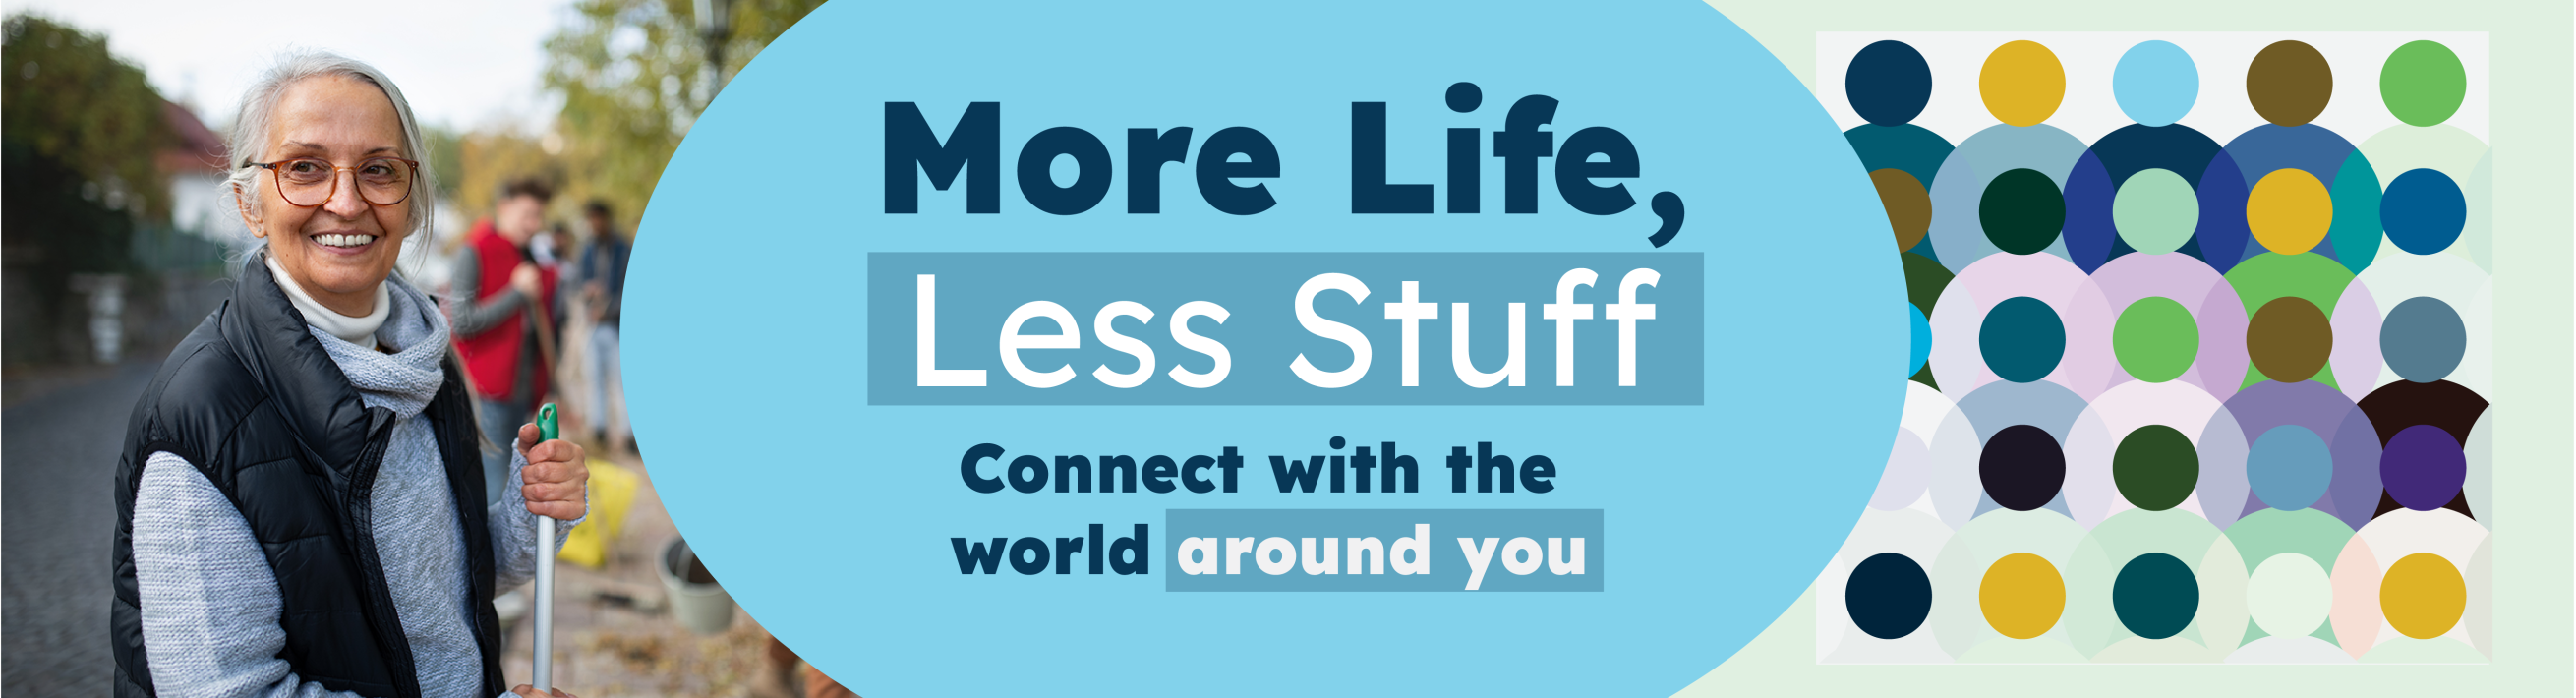 More Life Less Stuff